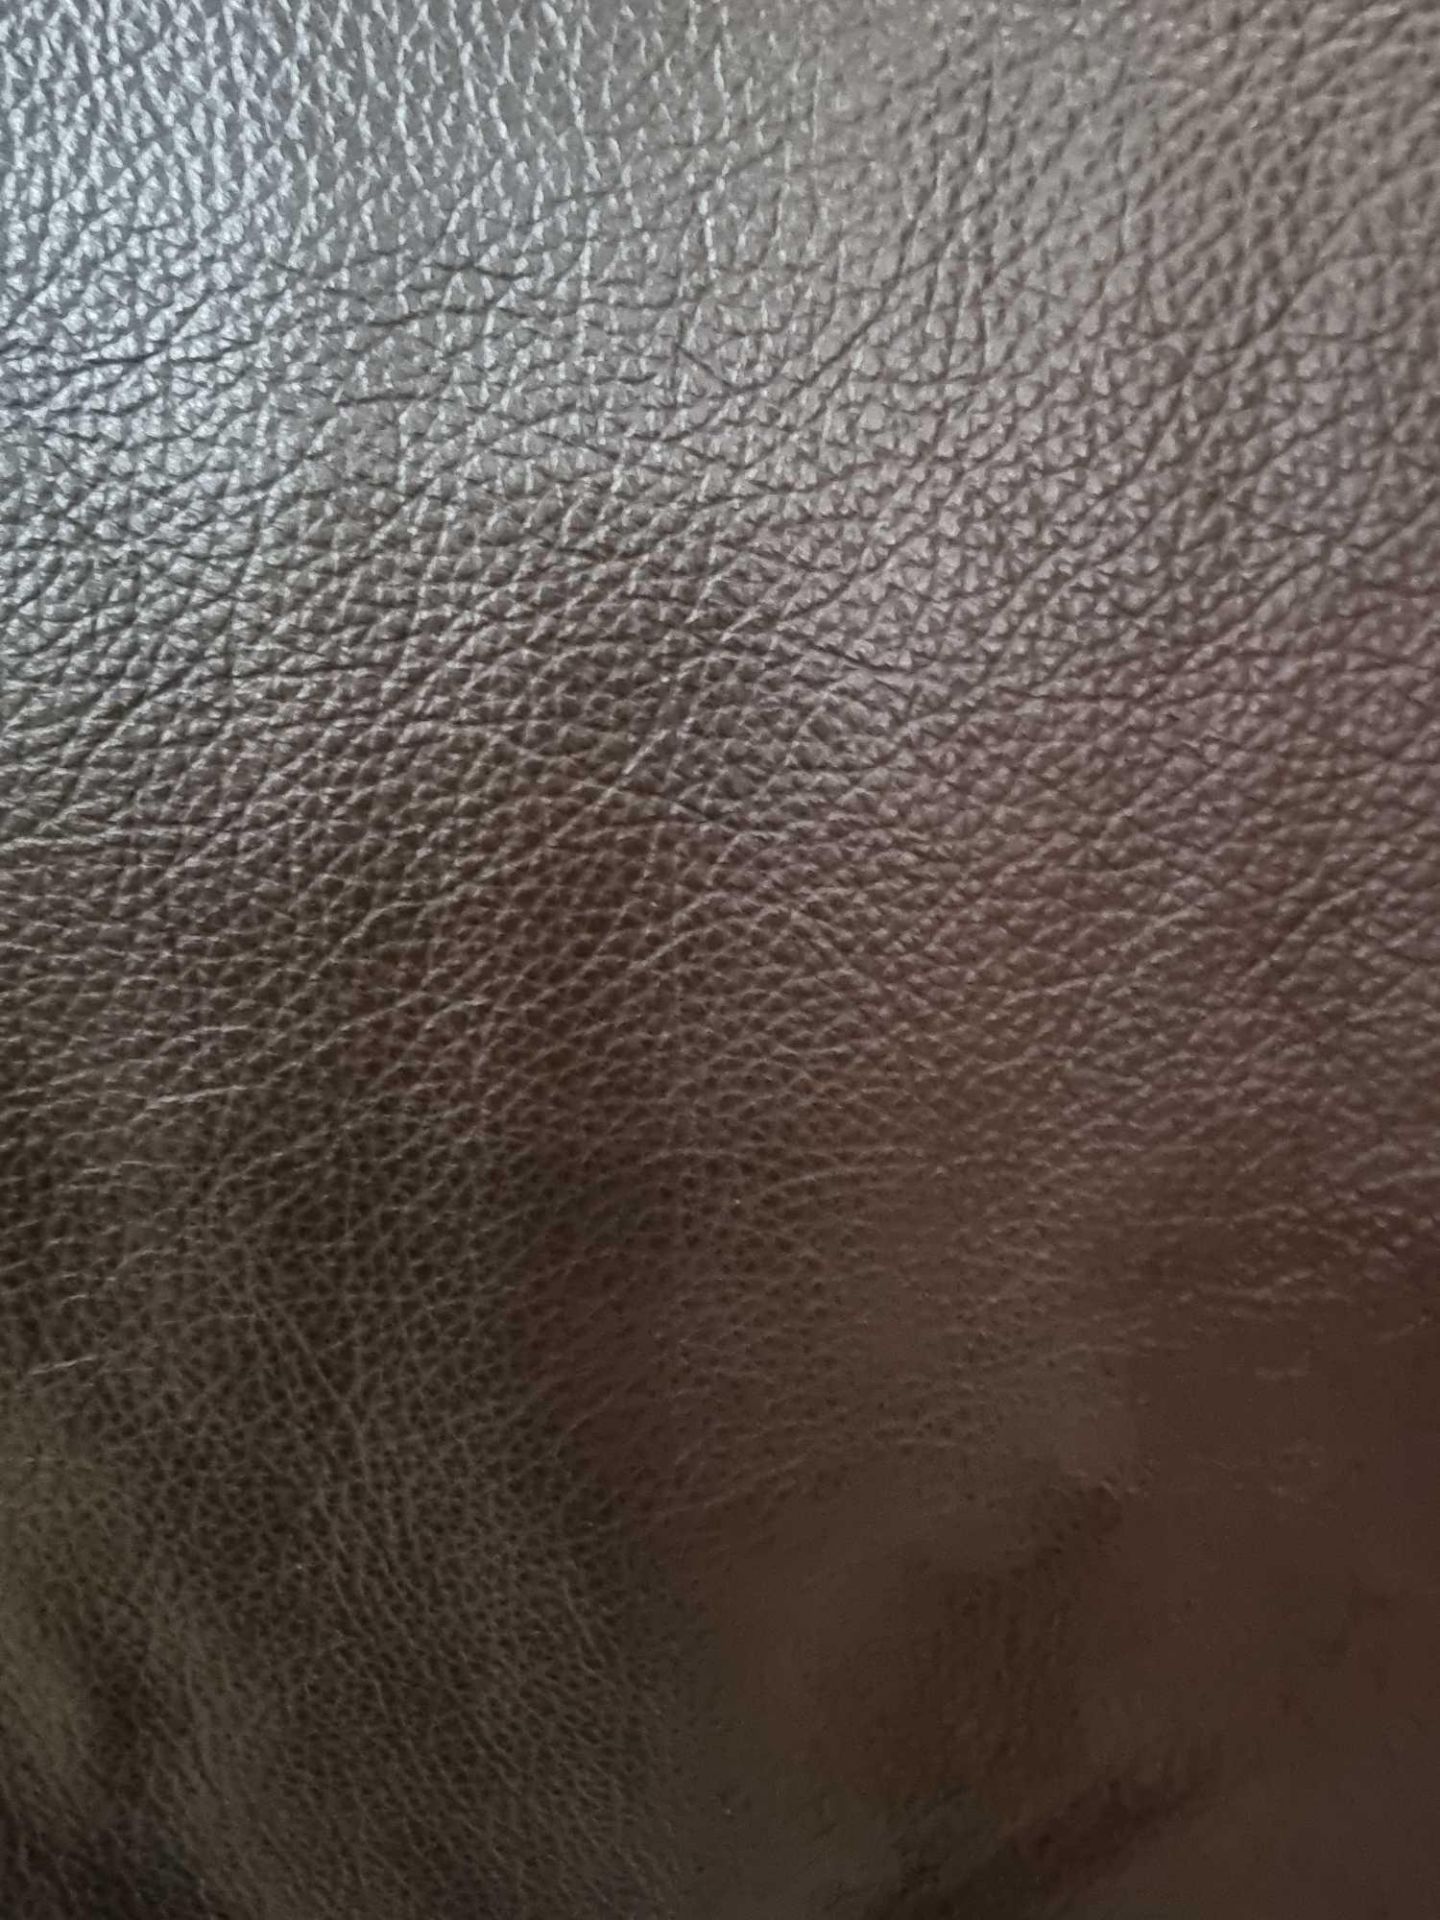 Mastrotto Dakota Chocolate Leather Hide approximately 3.8mÂ² 2 x 1.9cm - Image 2 of 3